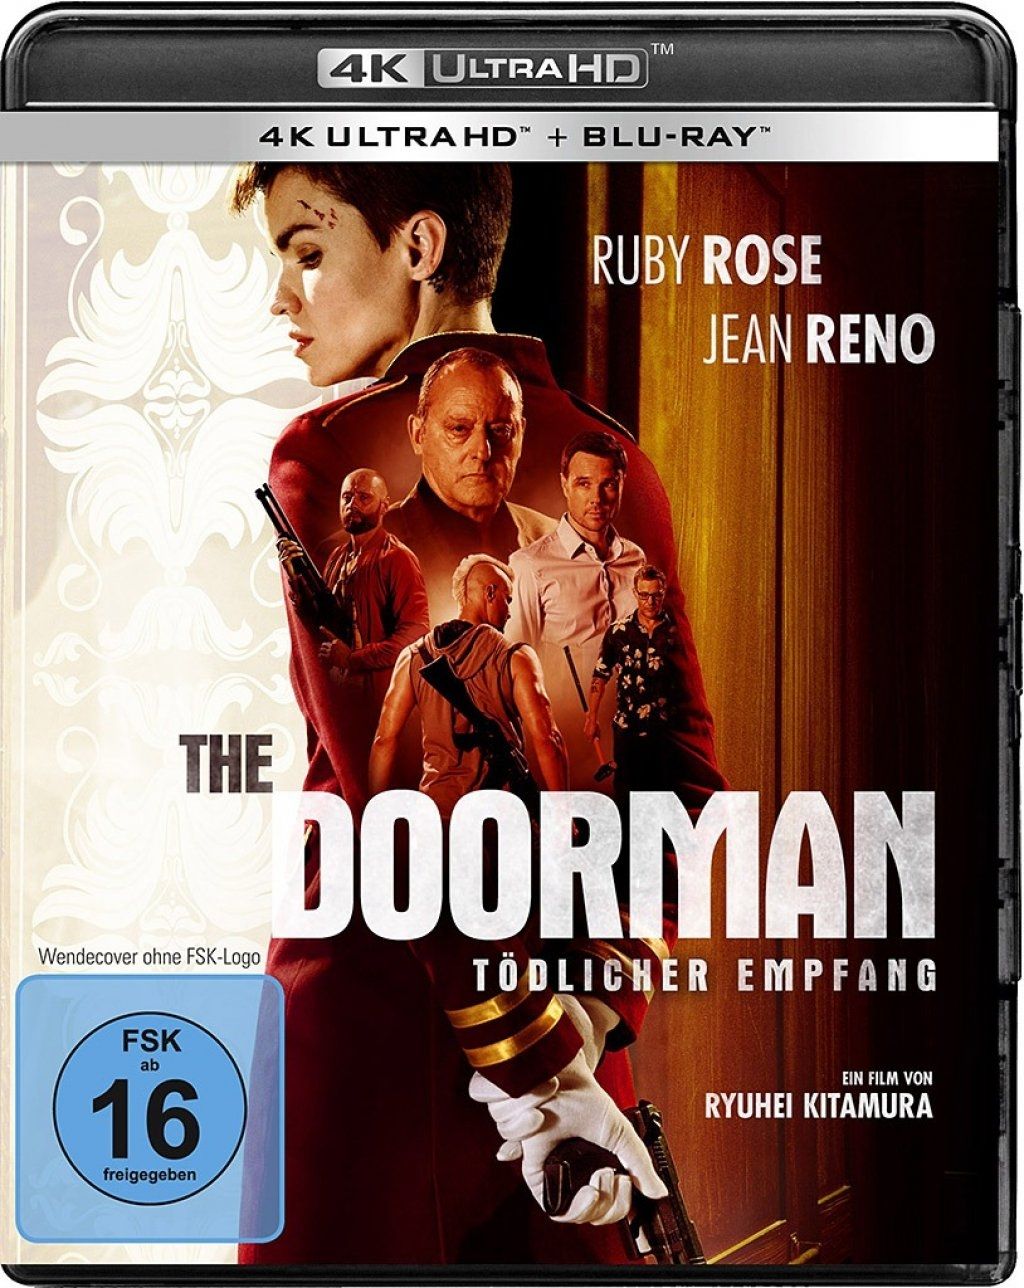 Doorman, The - Tödlicher Empfang (2 Discs) (UHD BLURAY + BLURAY)